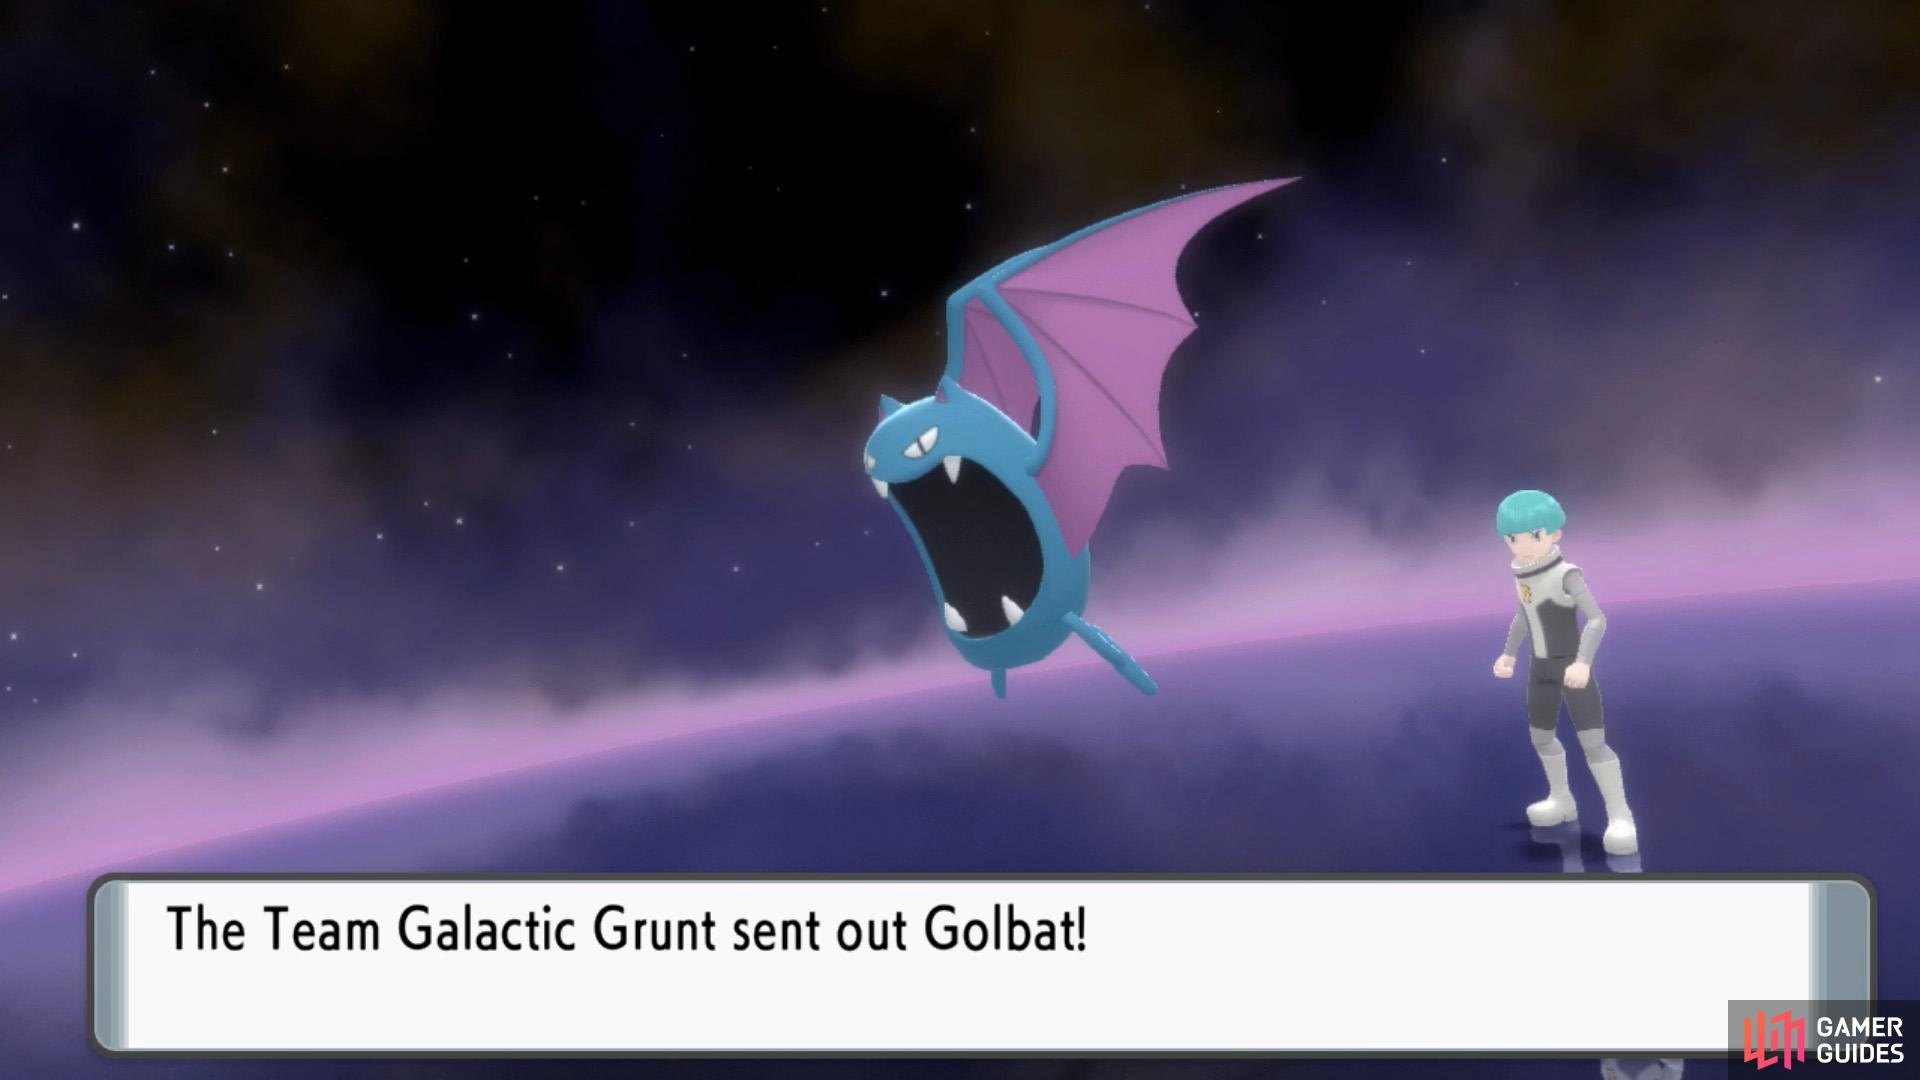 He'll send out Golbat as his only Pokémon.